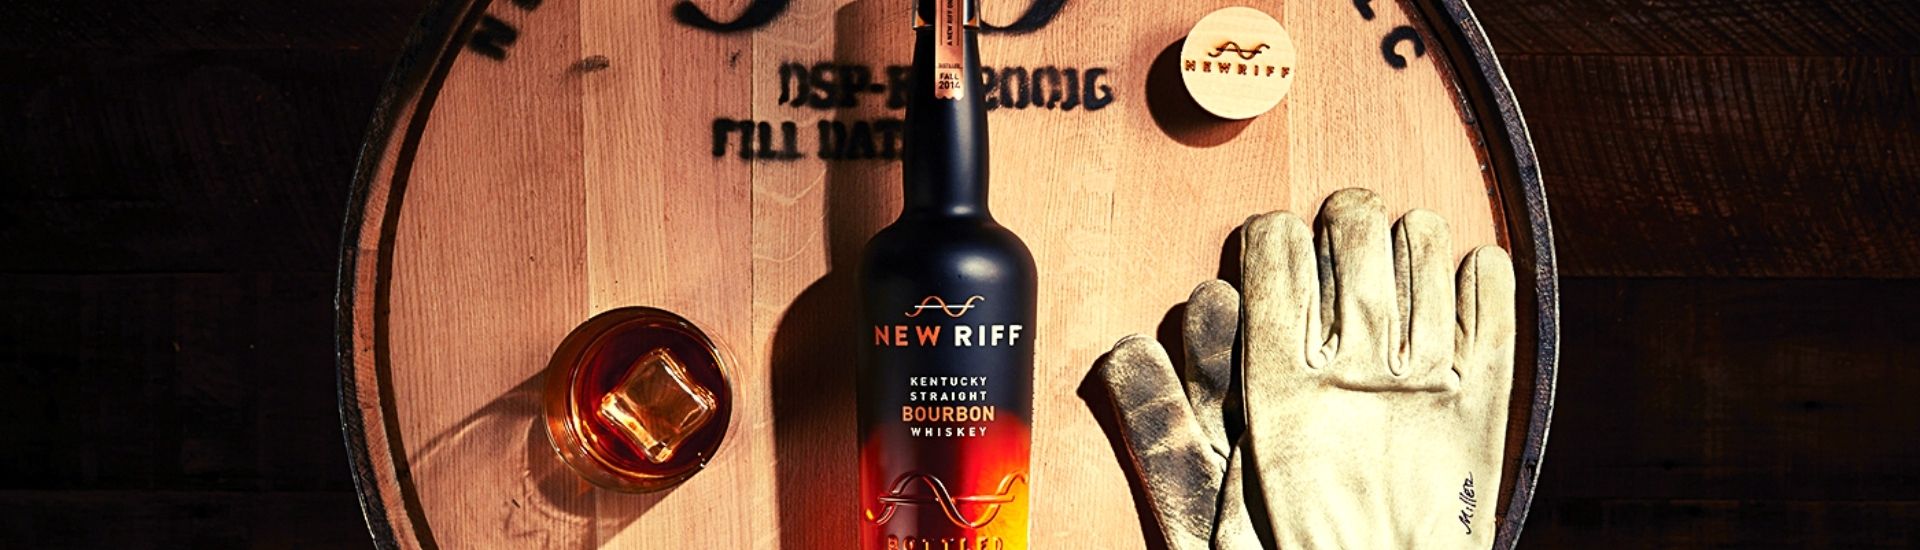 new riff kentucky straight bourbon bottle and barrels